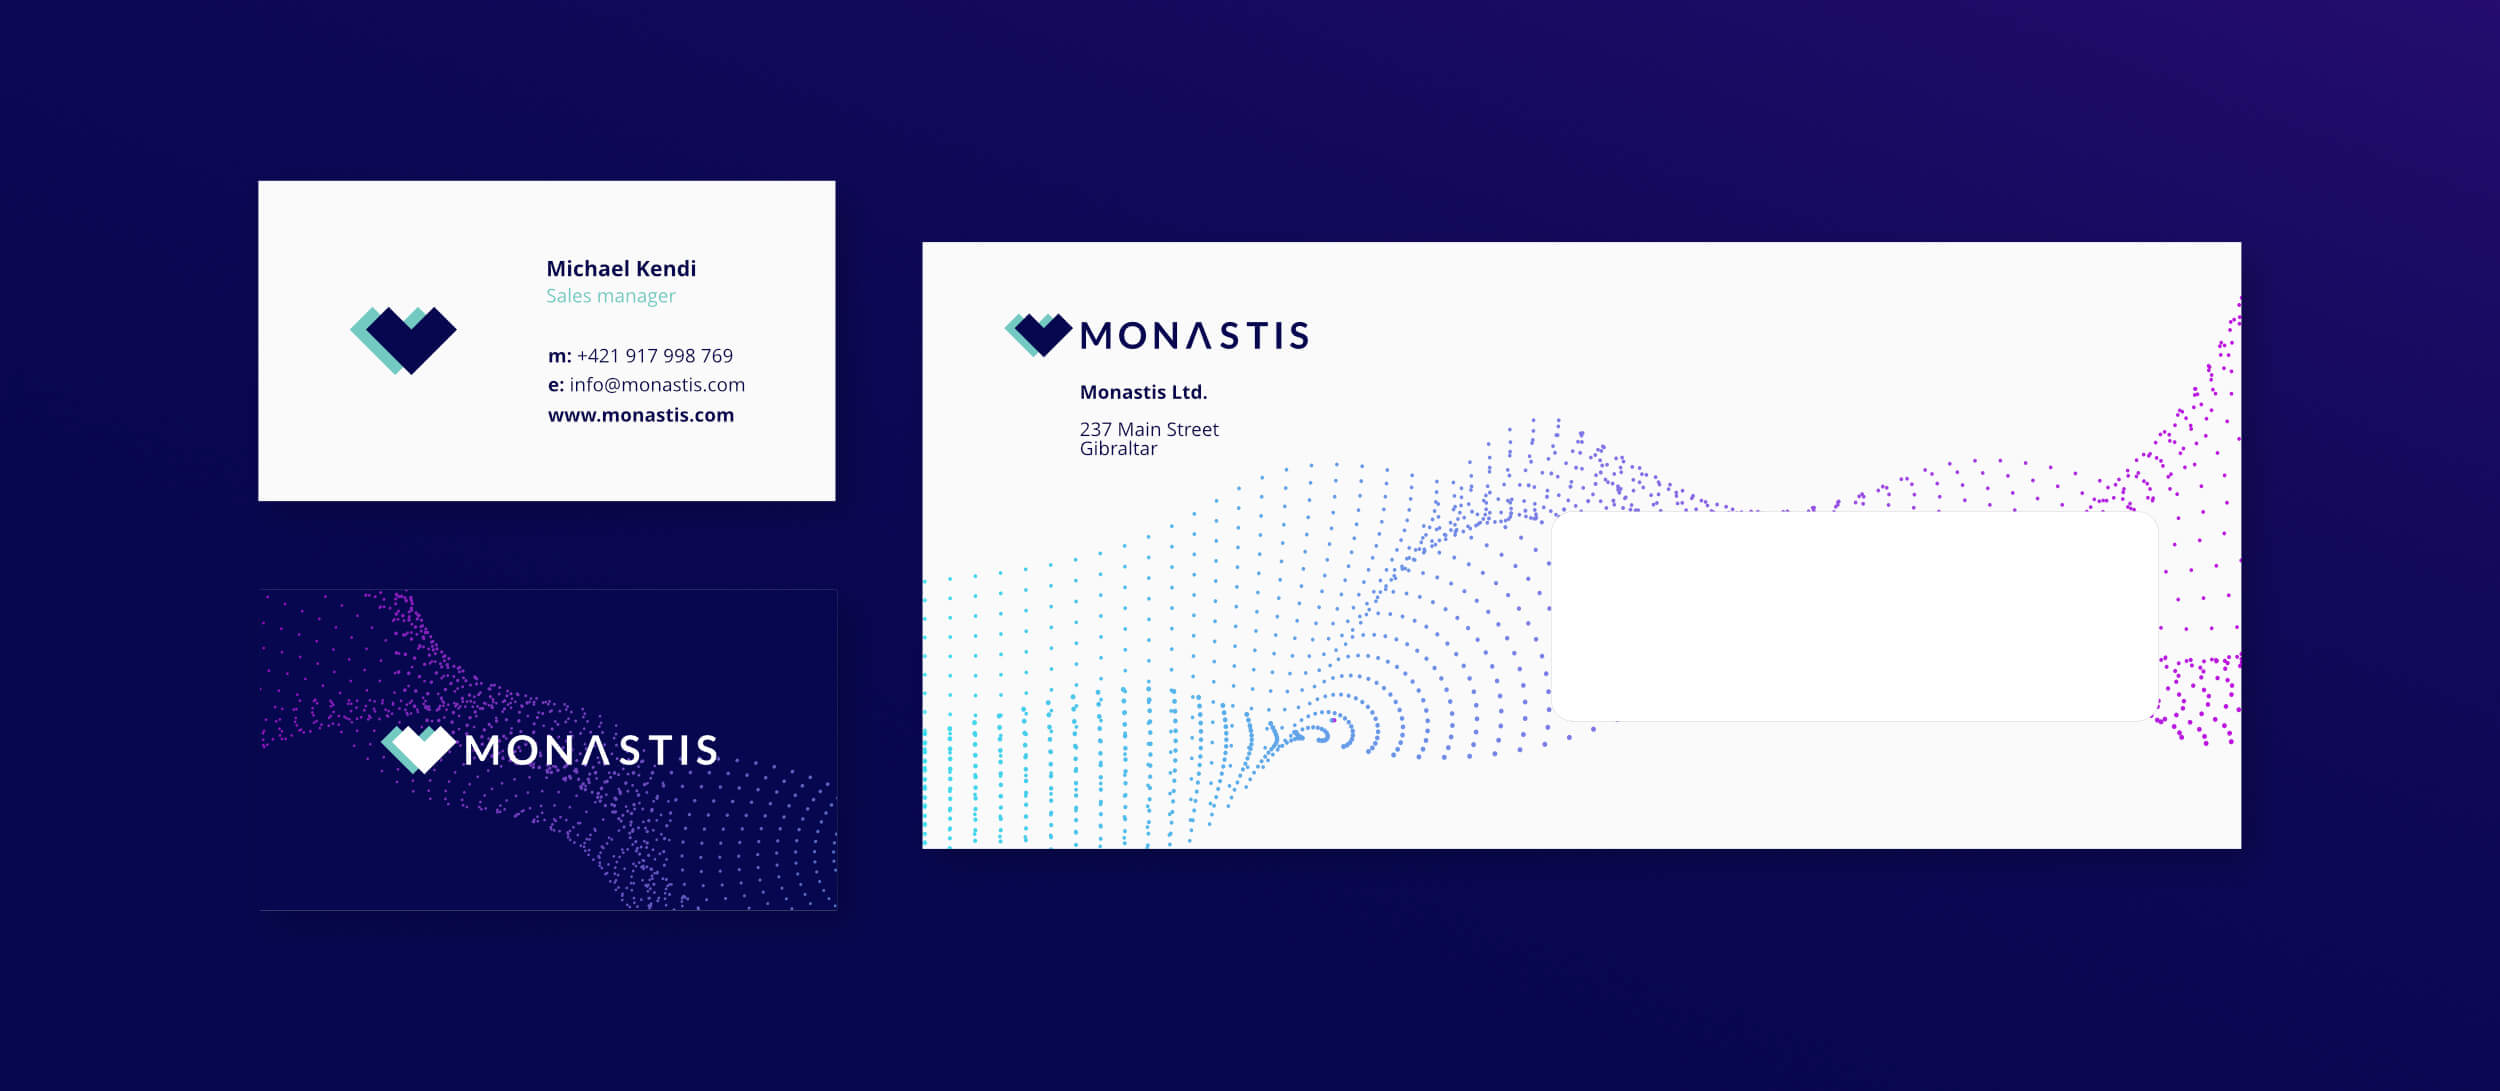 monastis corporate identity design by michael maleek djibril